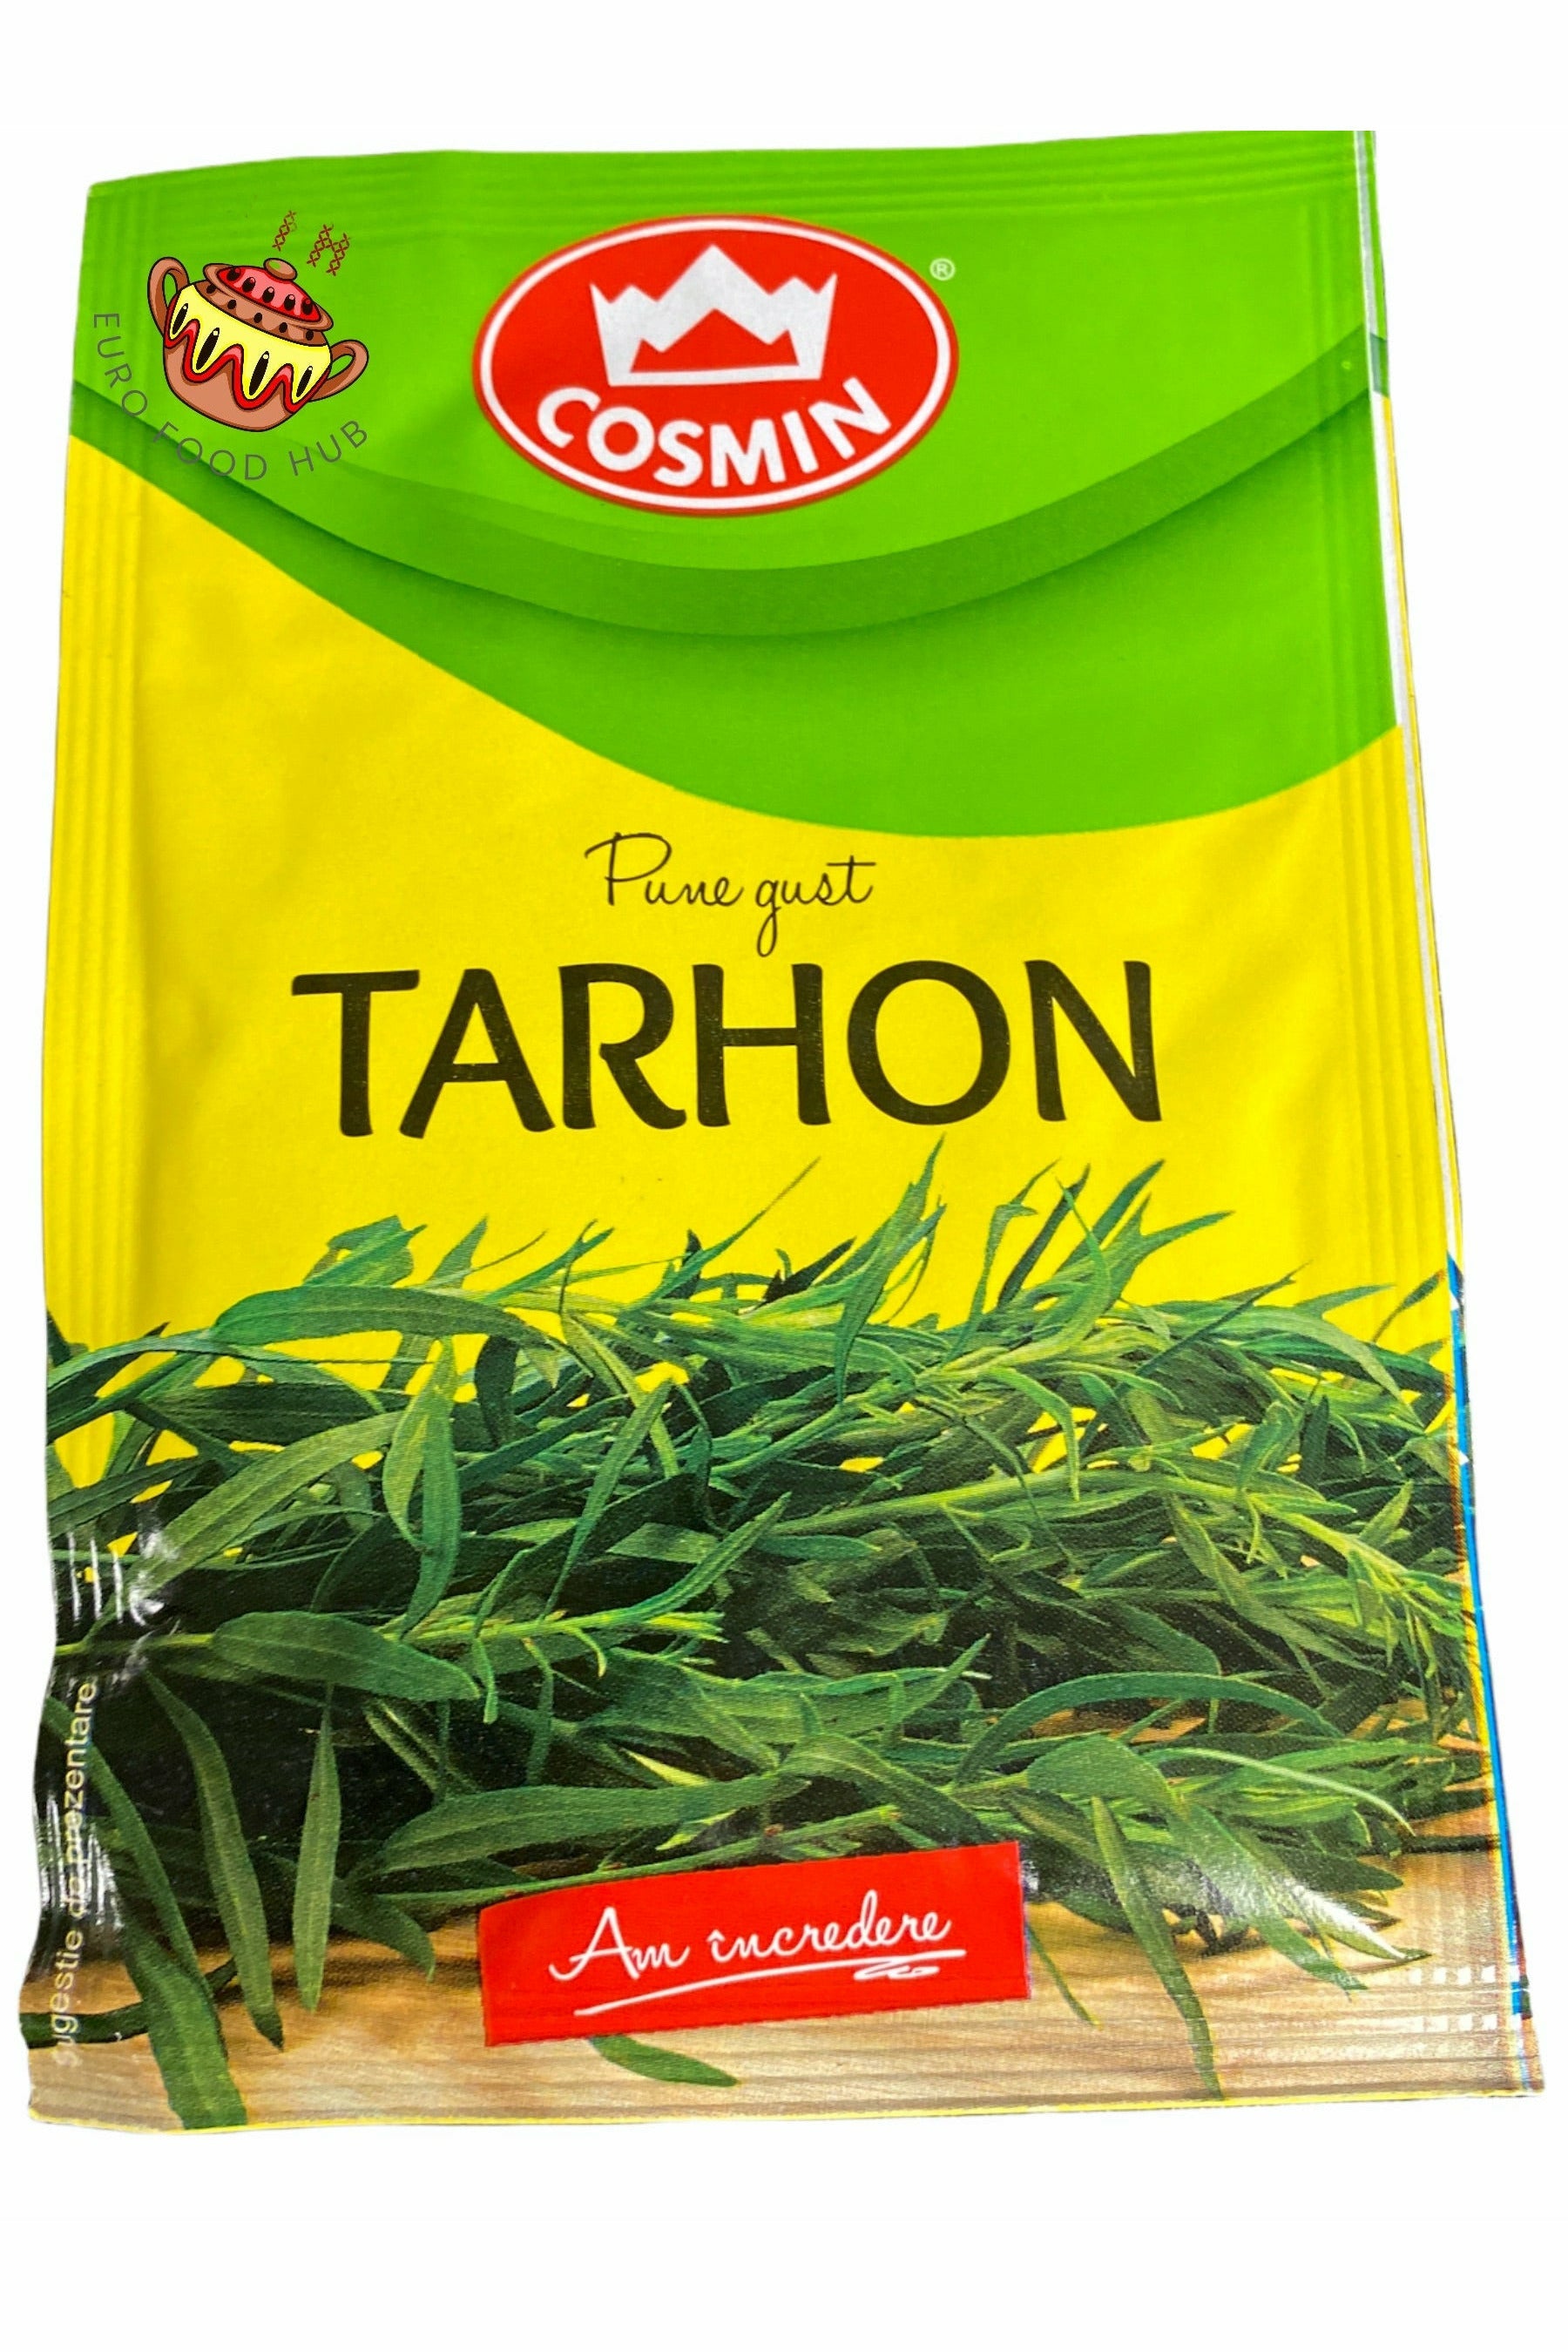 Tarhon - TARRAGON - Cosmin